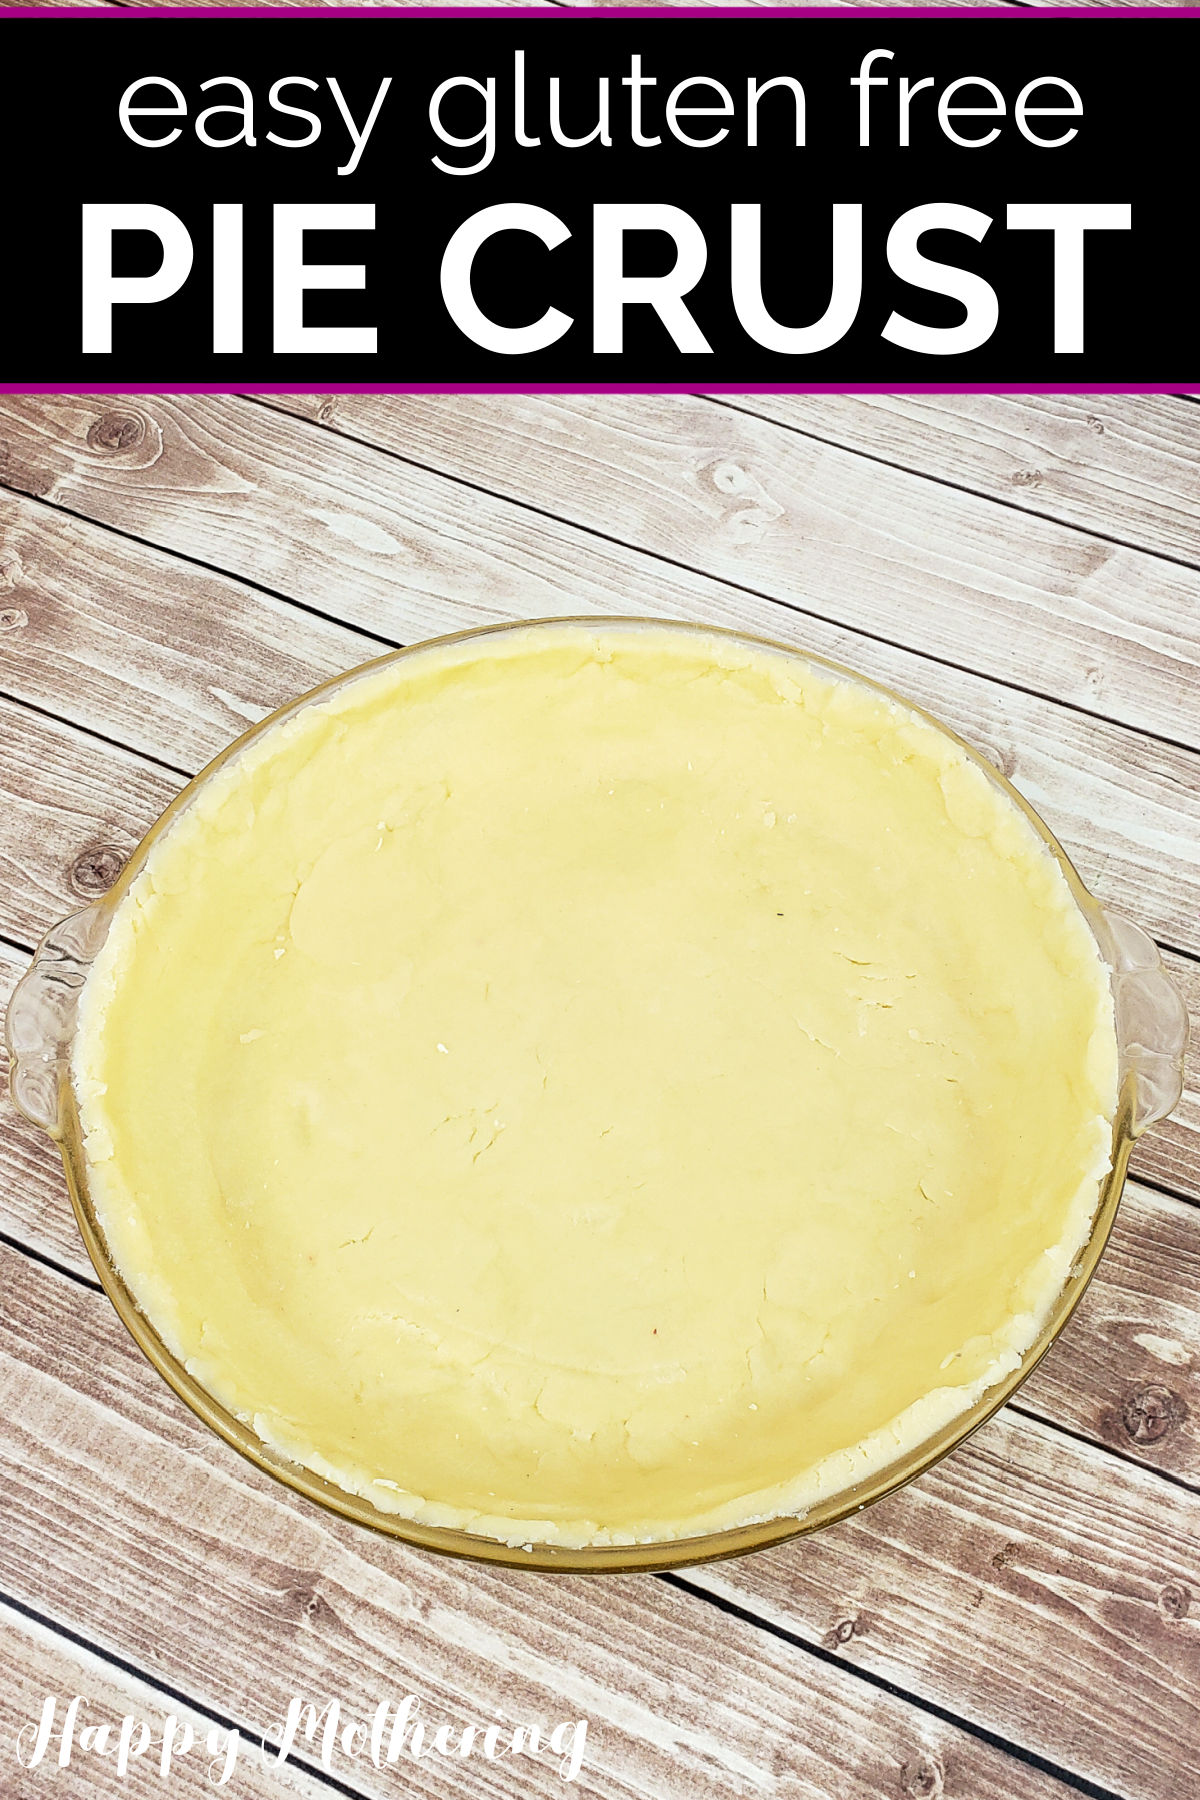 Gluten free pie crust in a 9-inch glass pie dish.